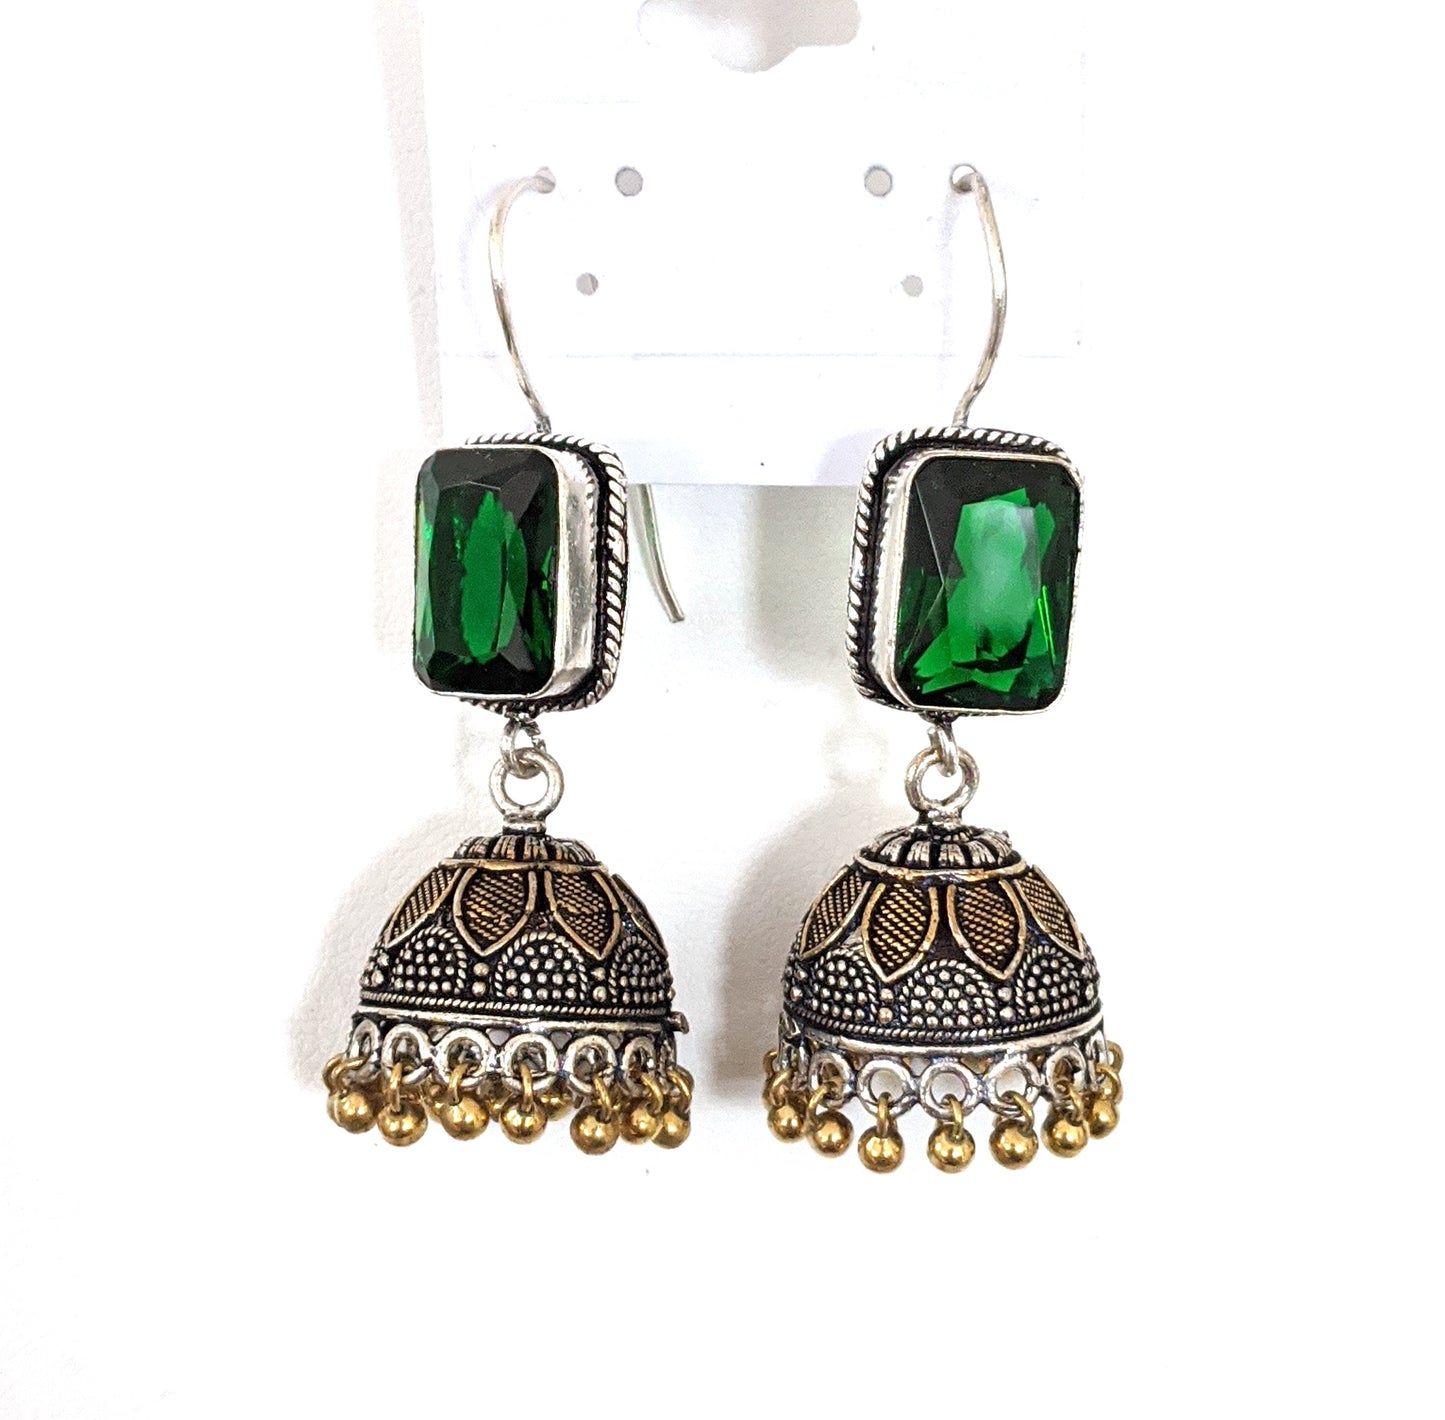 Oxidized silver colorful hook drop jhumka Earrings - 2 designs